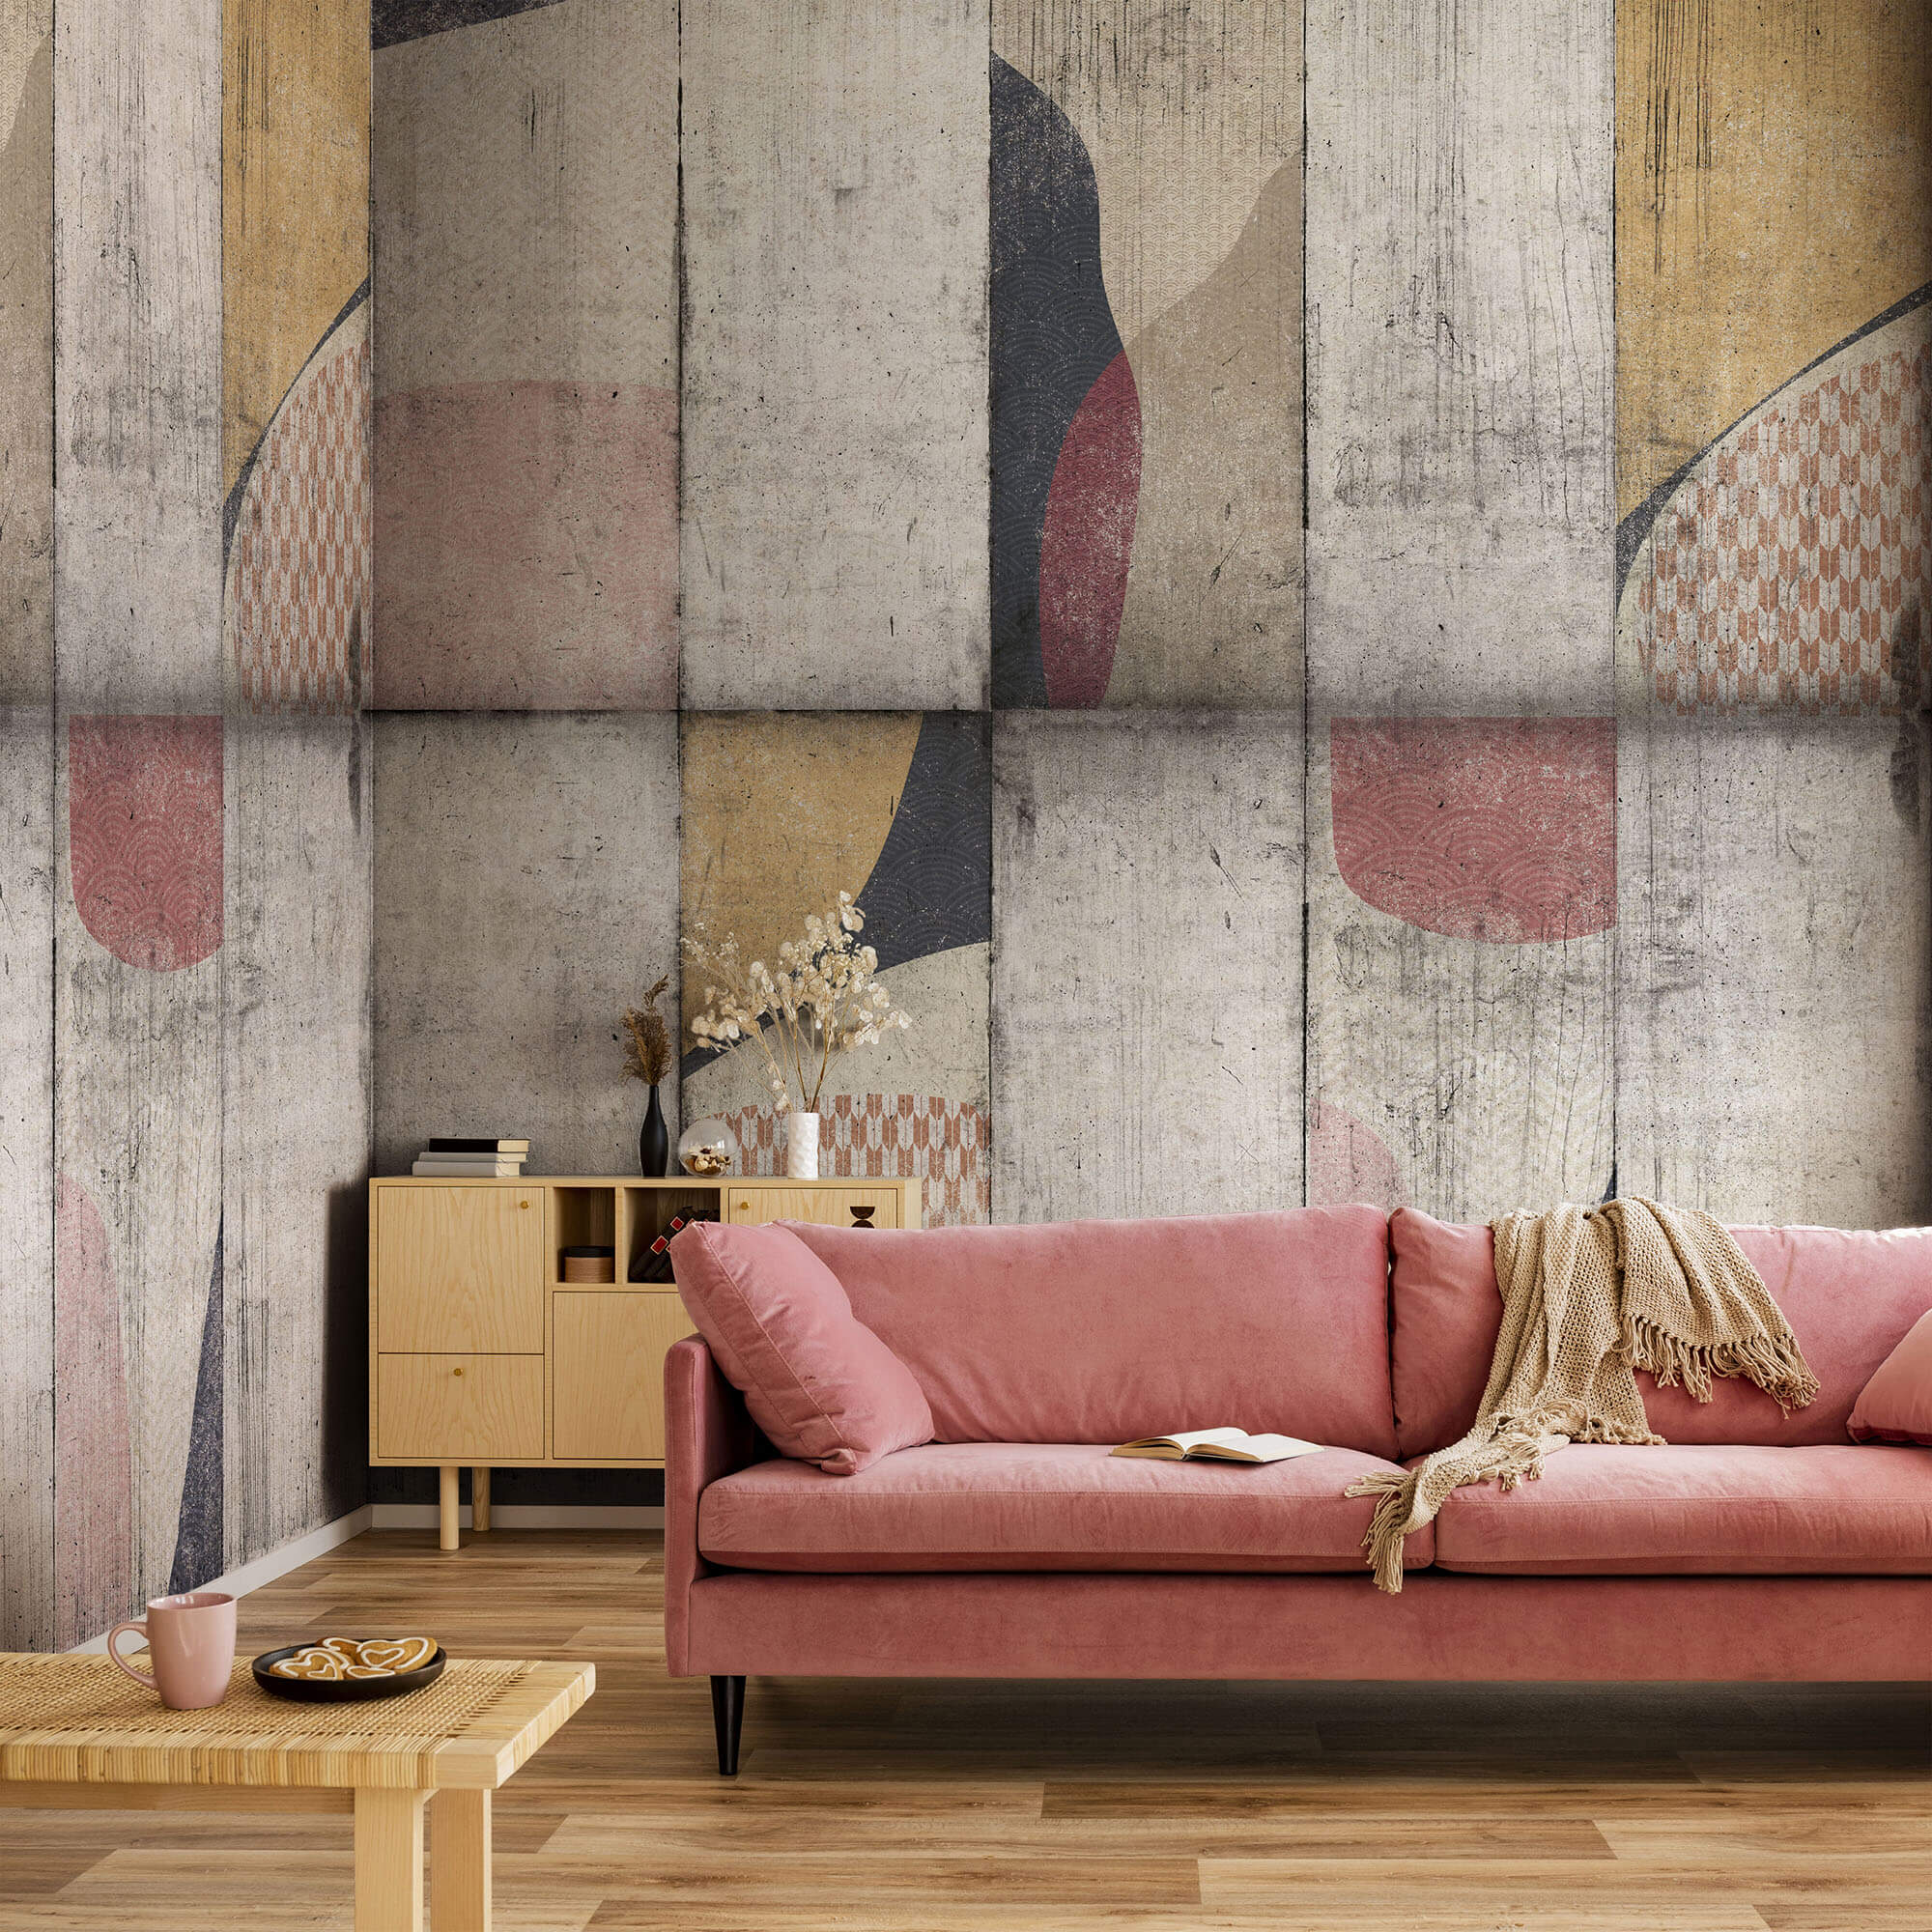 Comfortable velvet pastel pink couch in elegant beige interior w